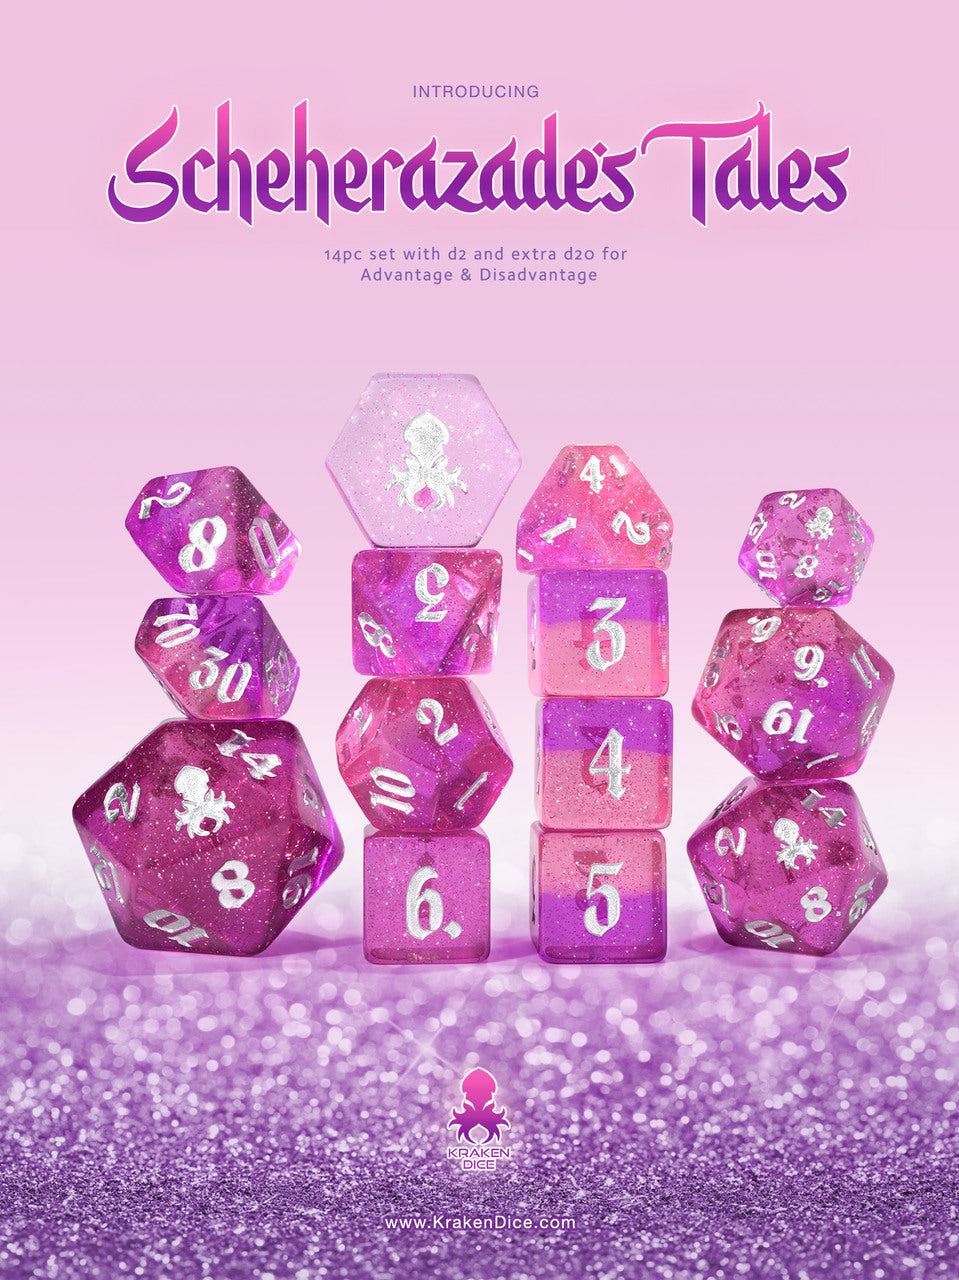 Scheherazade's Tales 14pc Dice Set - Bards & Cards